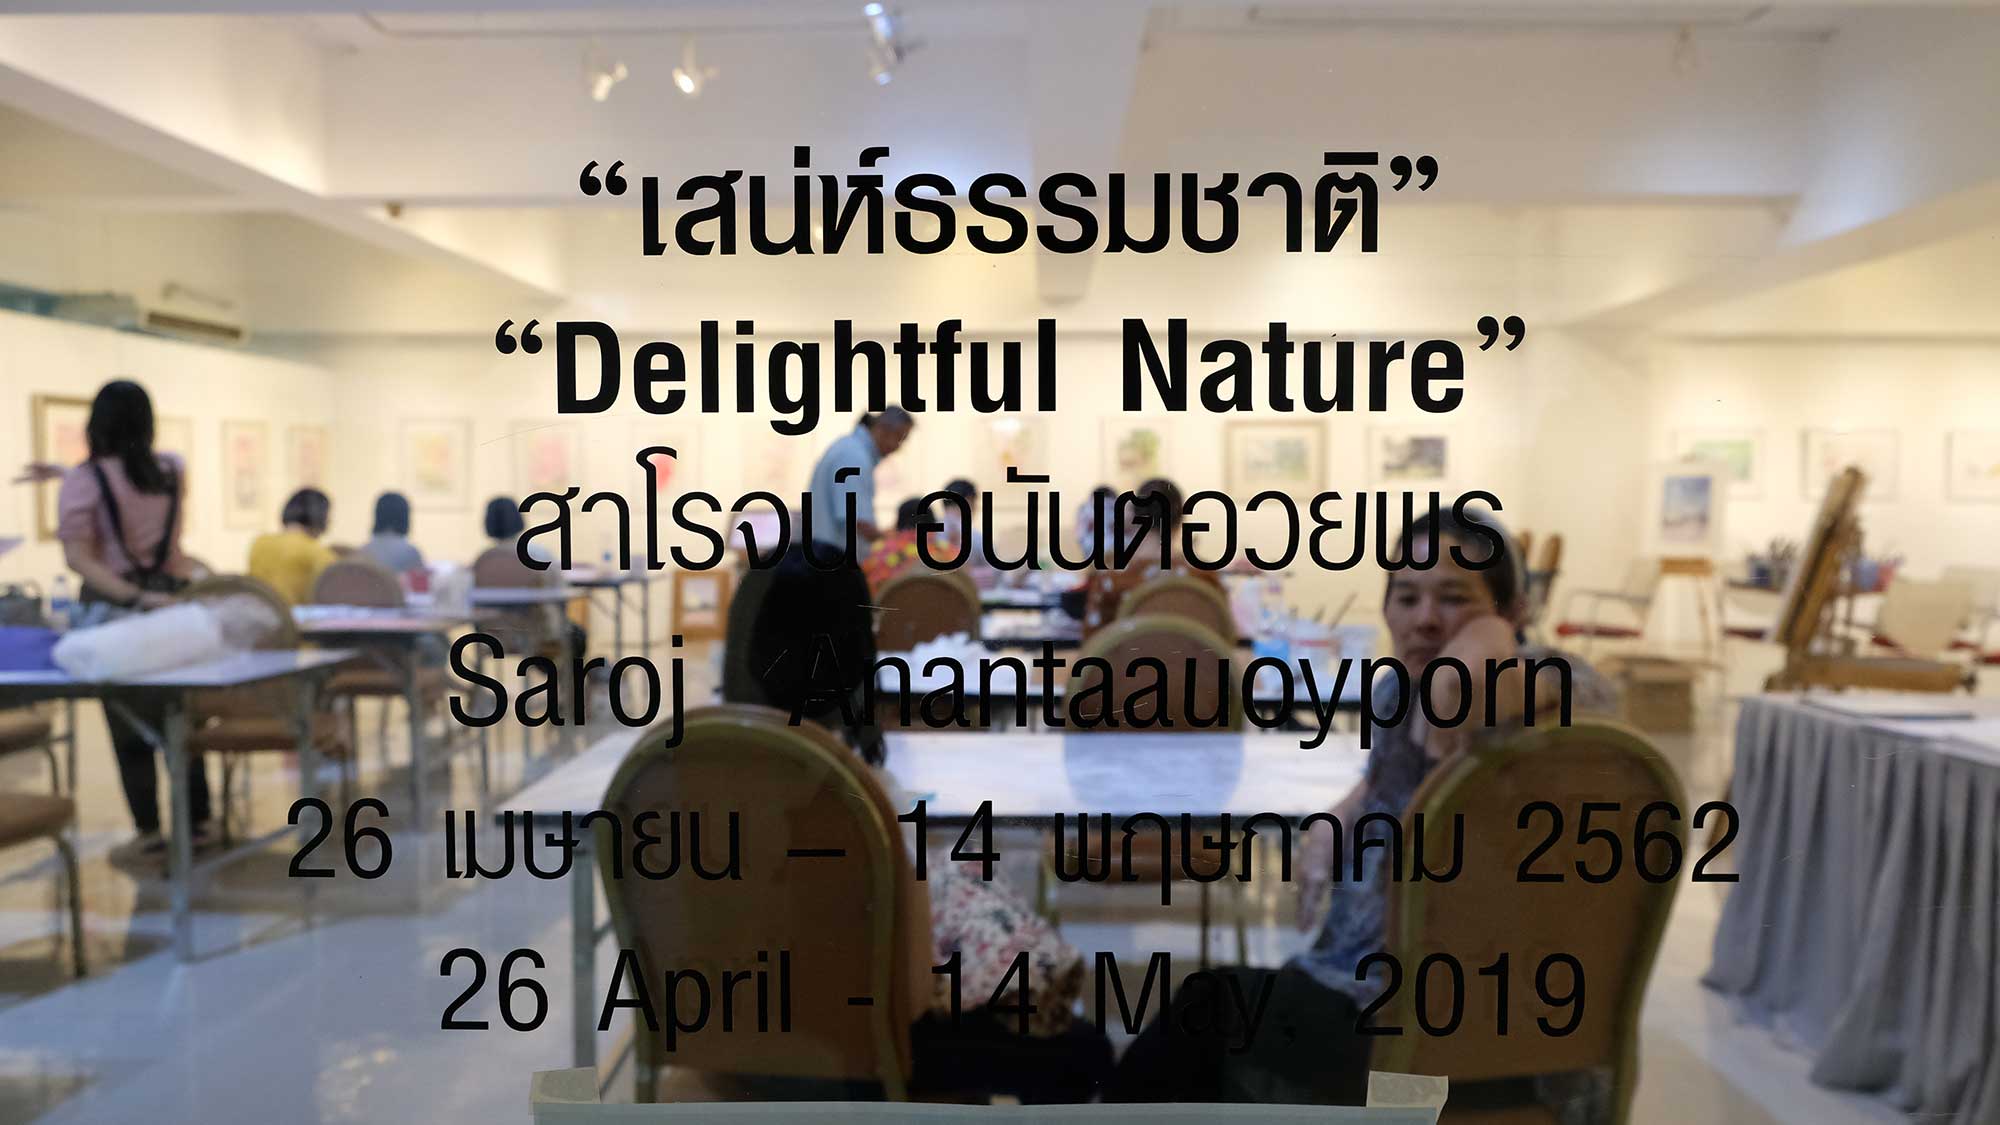 Exhibition Delightful Nature By Saroj Anantaauoyporn | นิทรรศการ เสน่ห์ธรรมชาติ โดย สาโรจน์ อนันตอวยพร